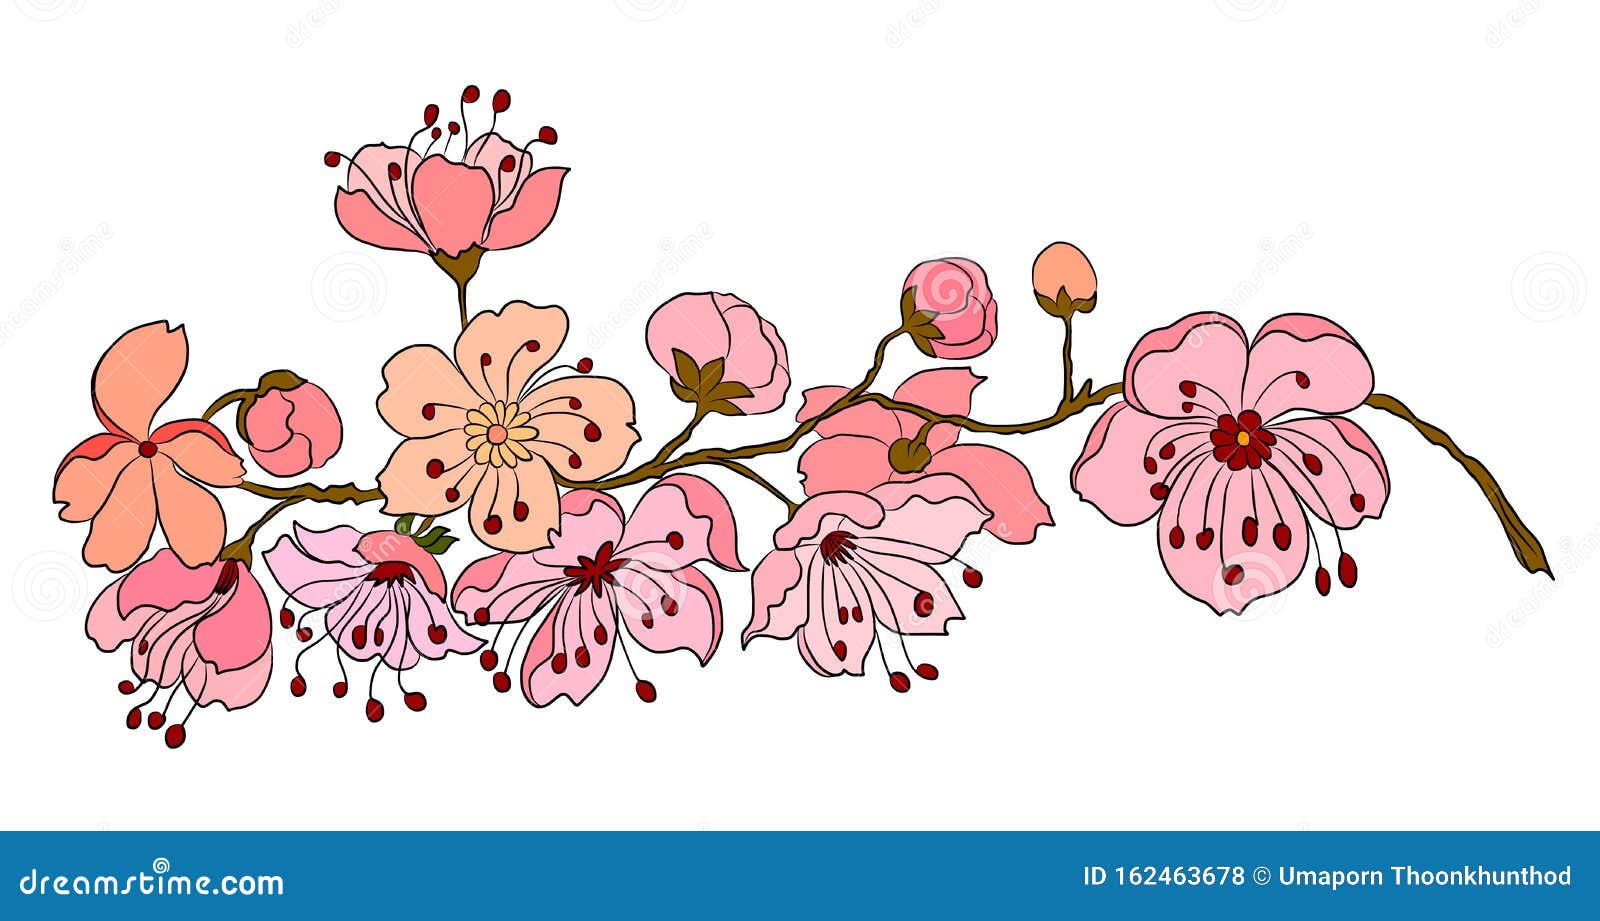 Branch Of Sakura Flower Vector For Tattoo Style On Isolated White